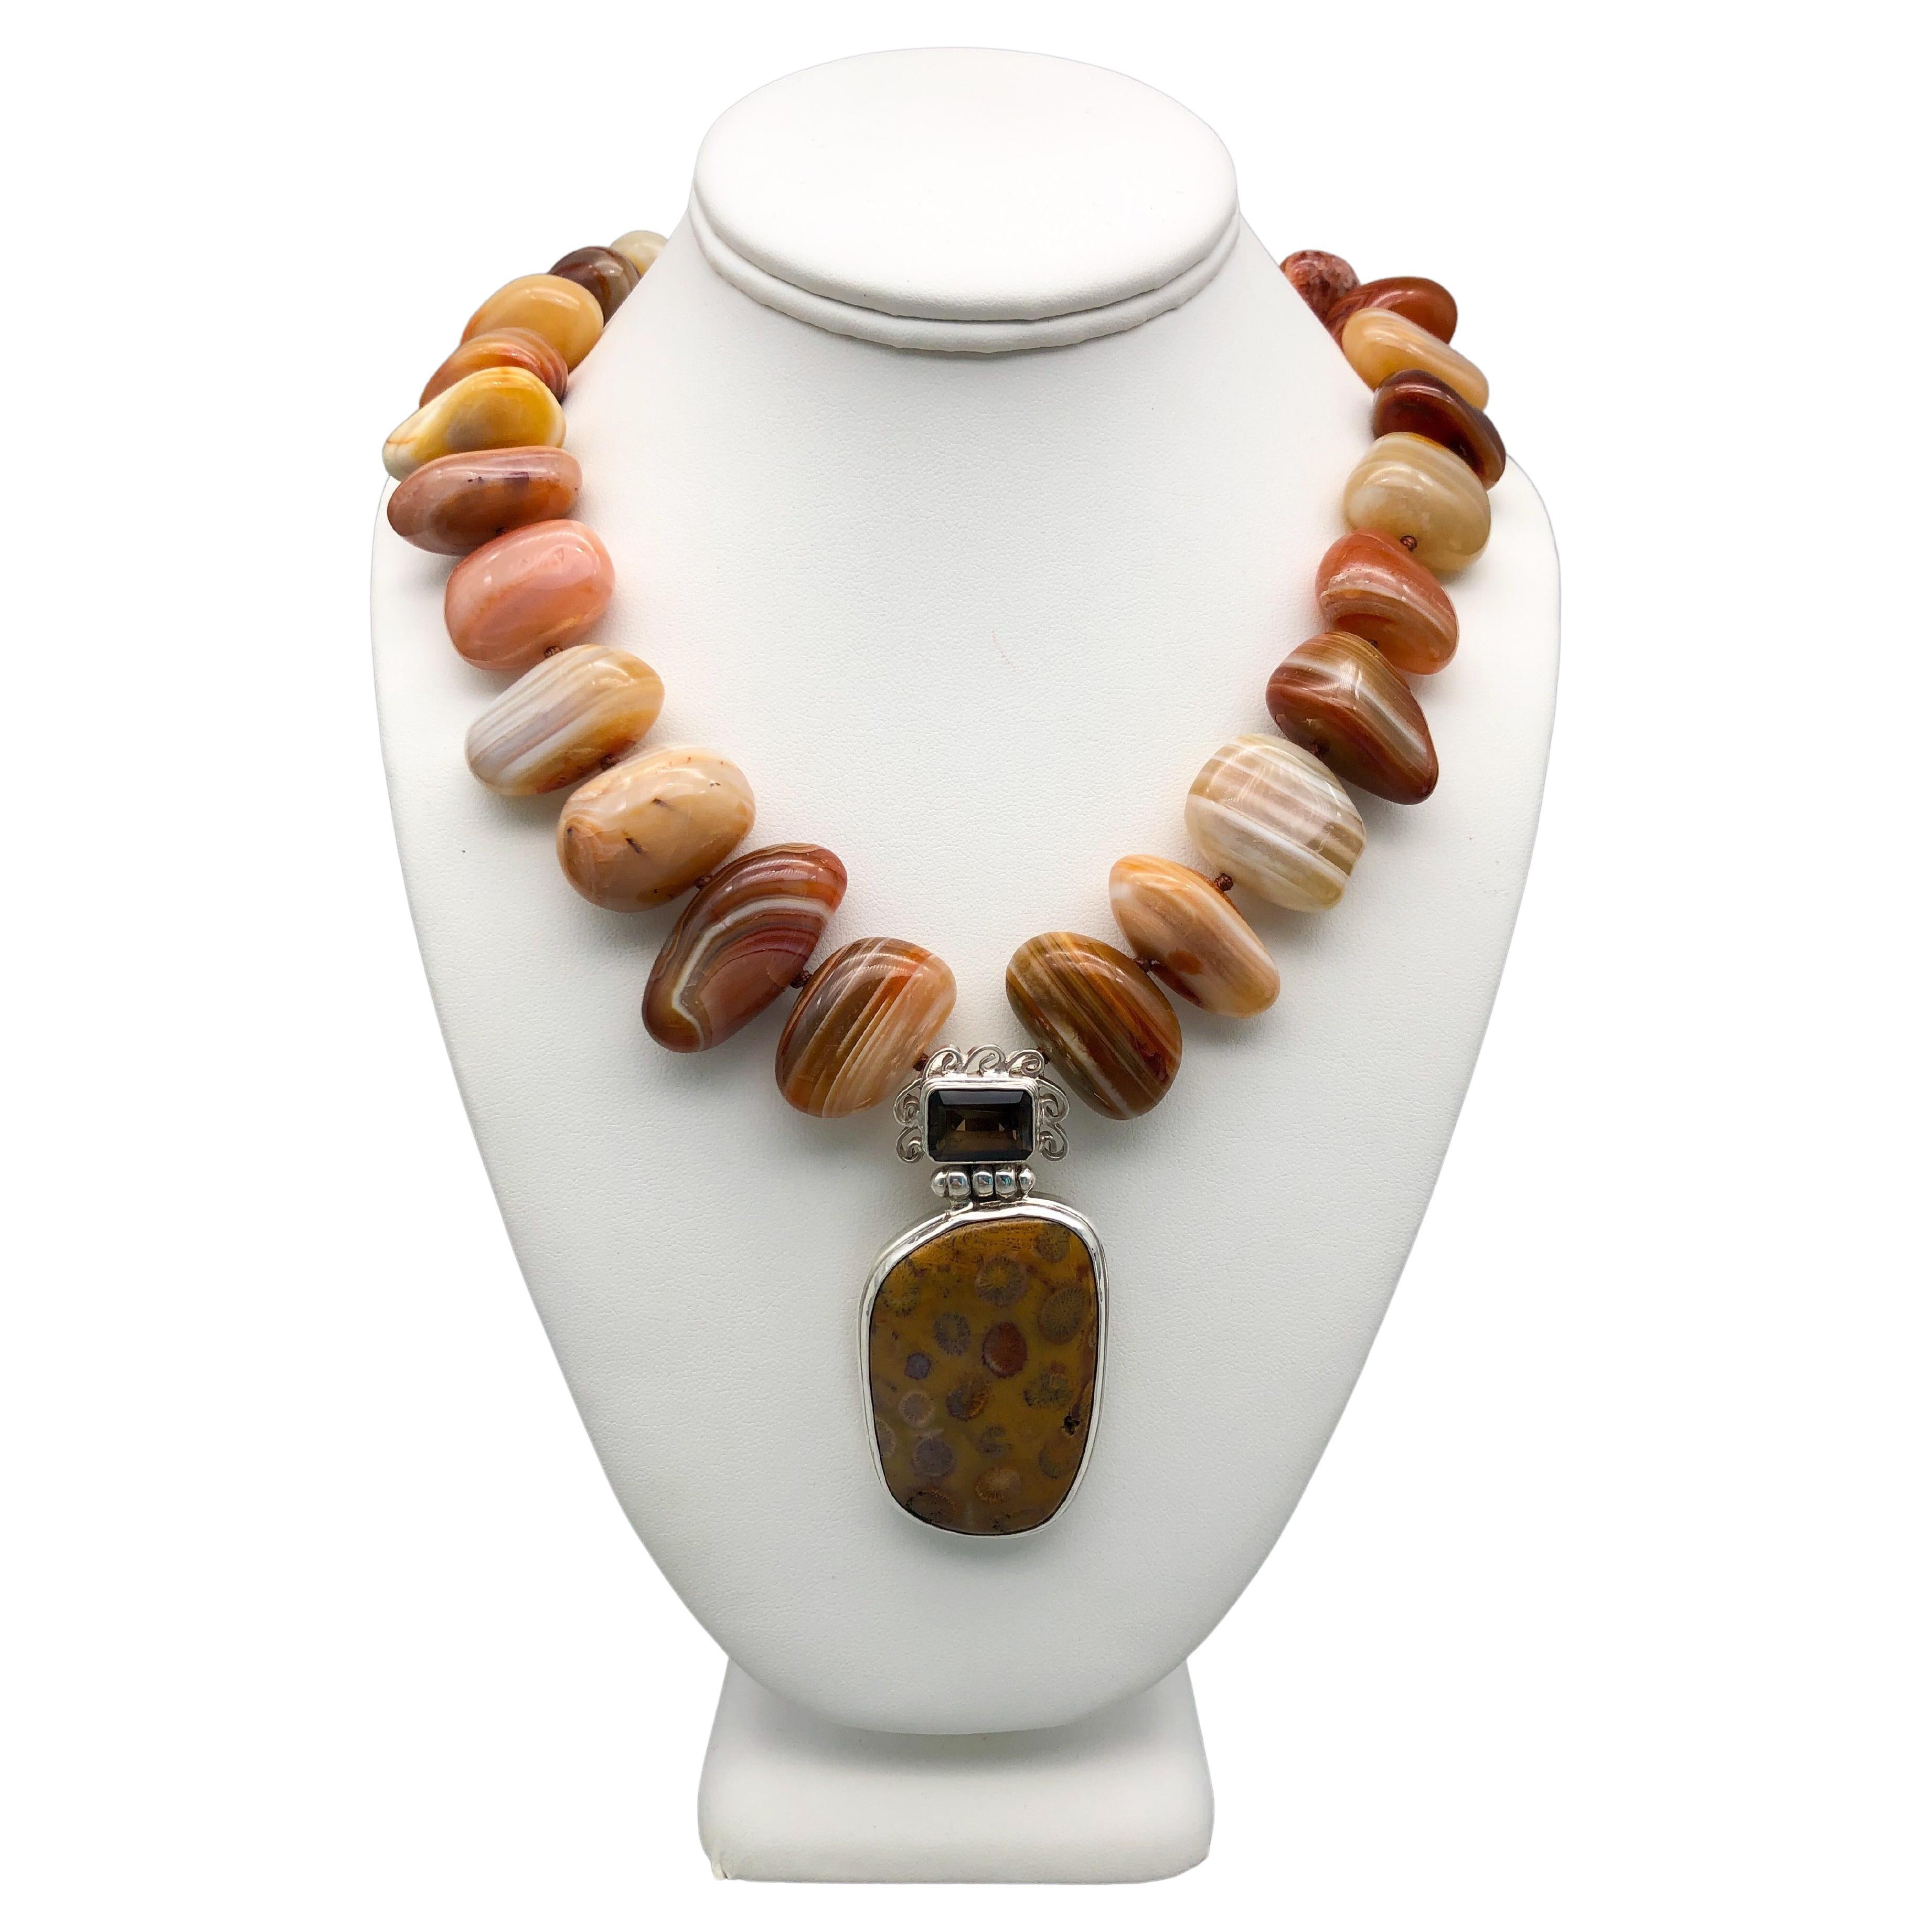 A.Jeschel Honey-colored striped Brazilian Agate pendant necklace.